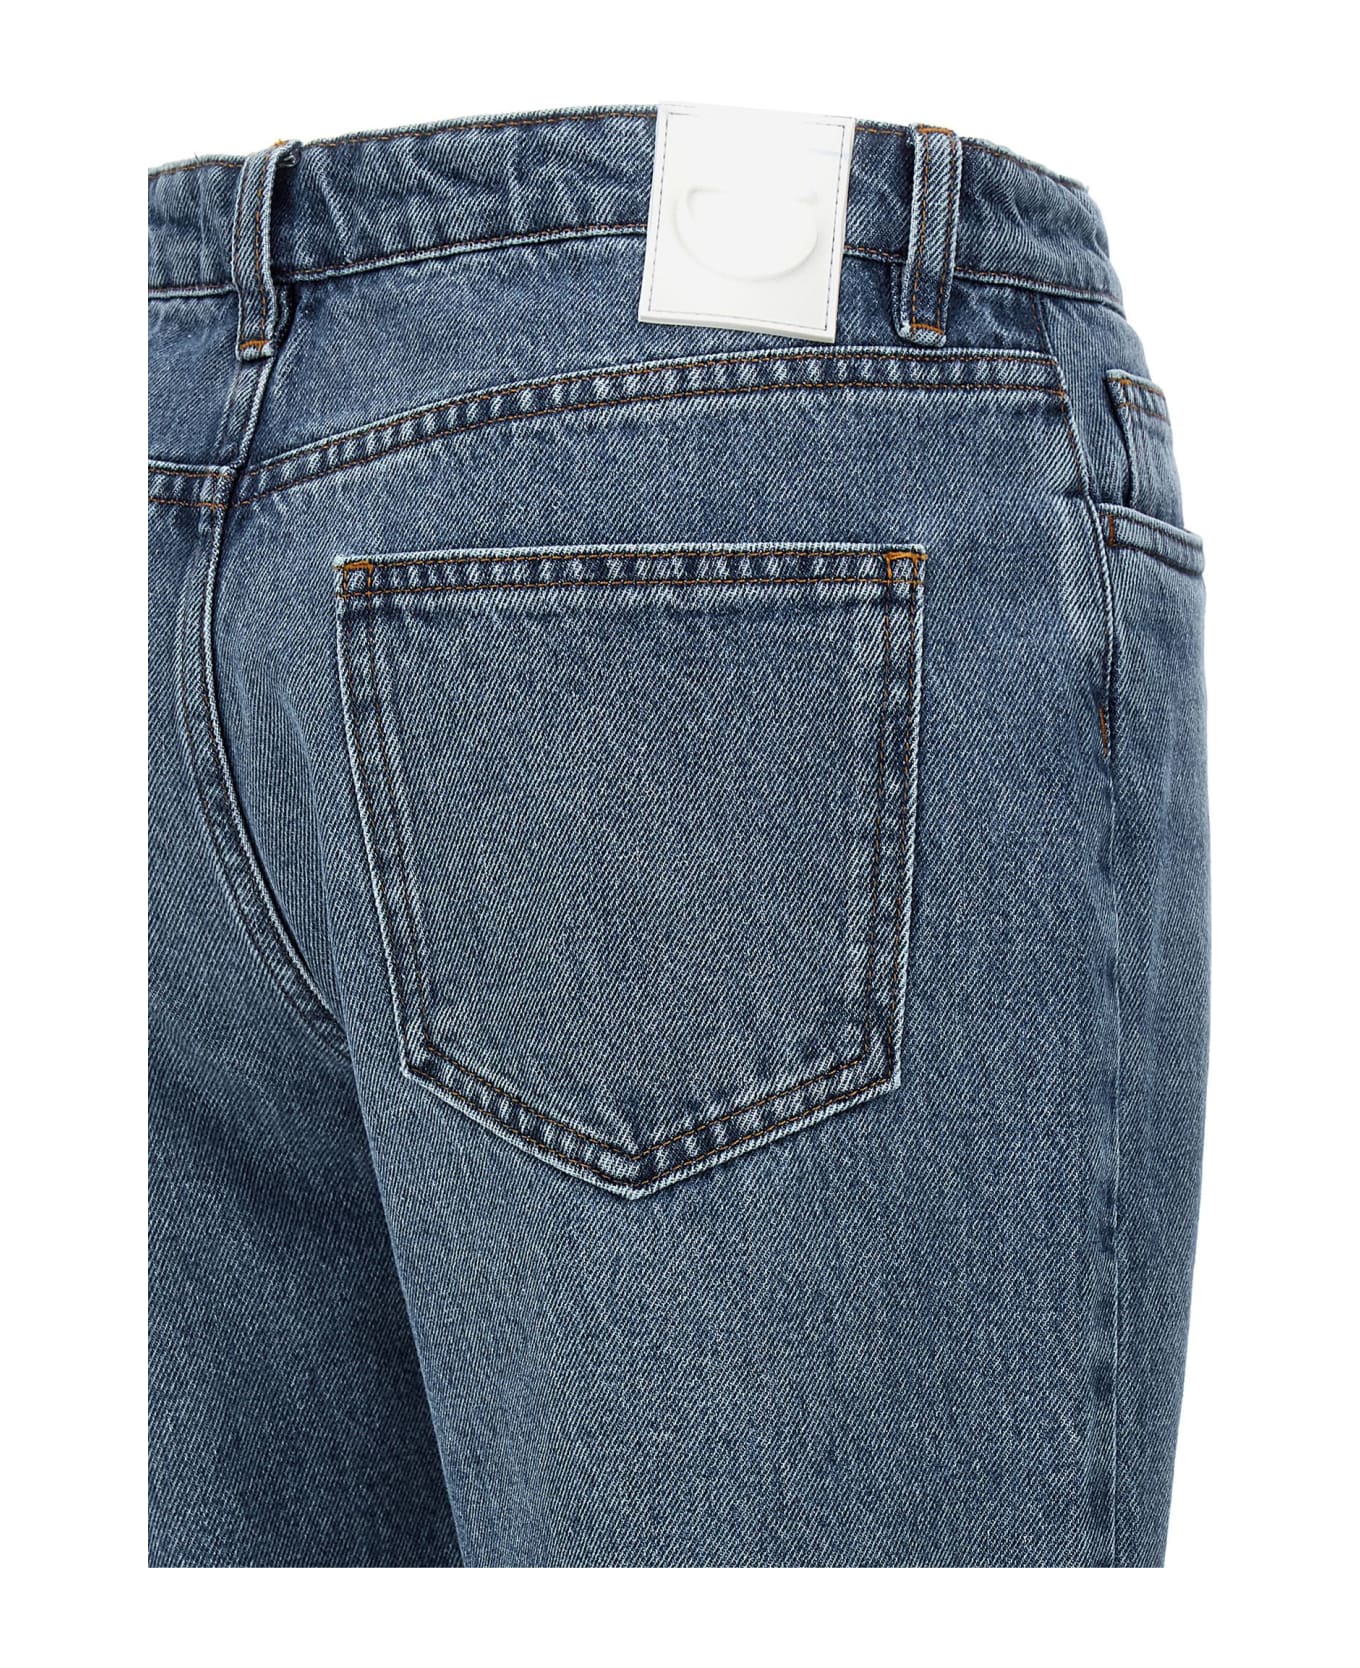 Coperni 'open Knee' Jeans - Wasblu Washed Blue